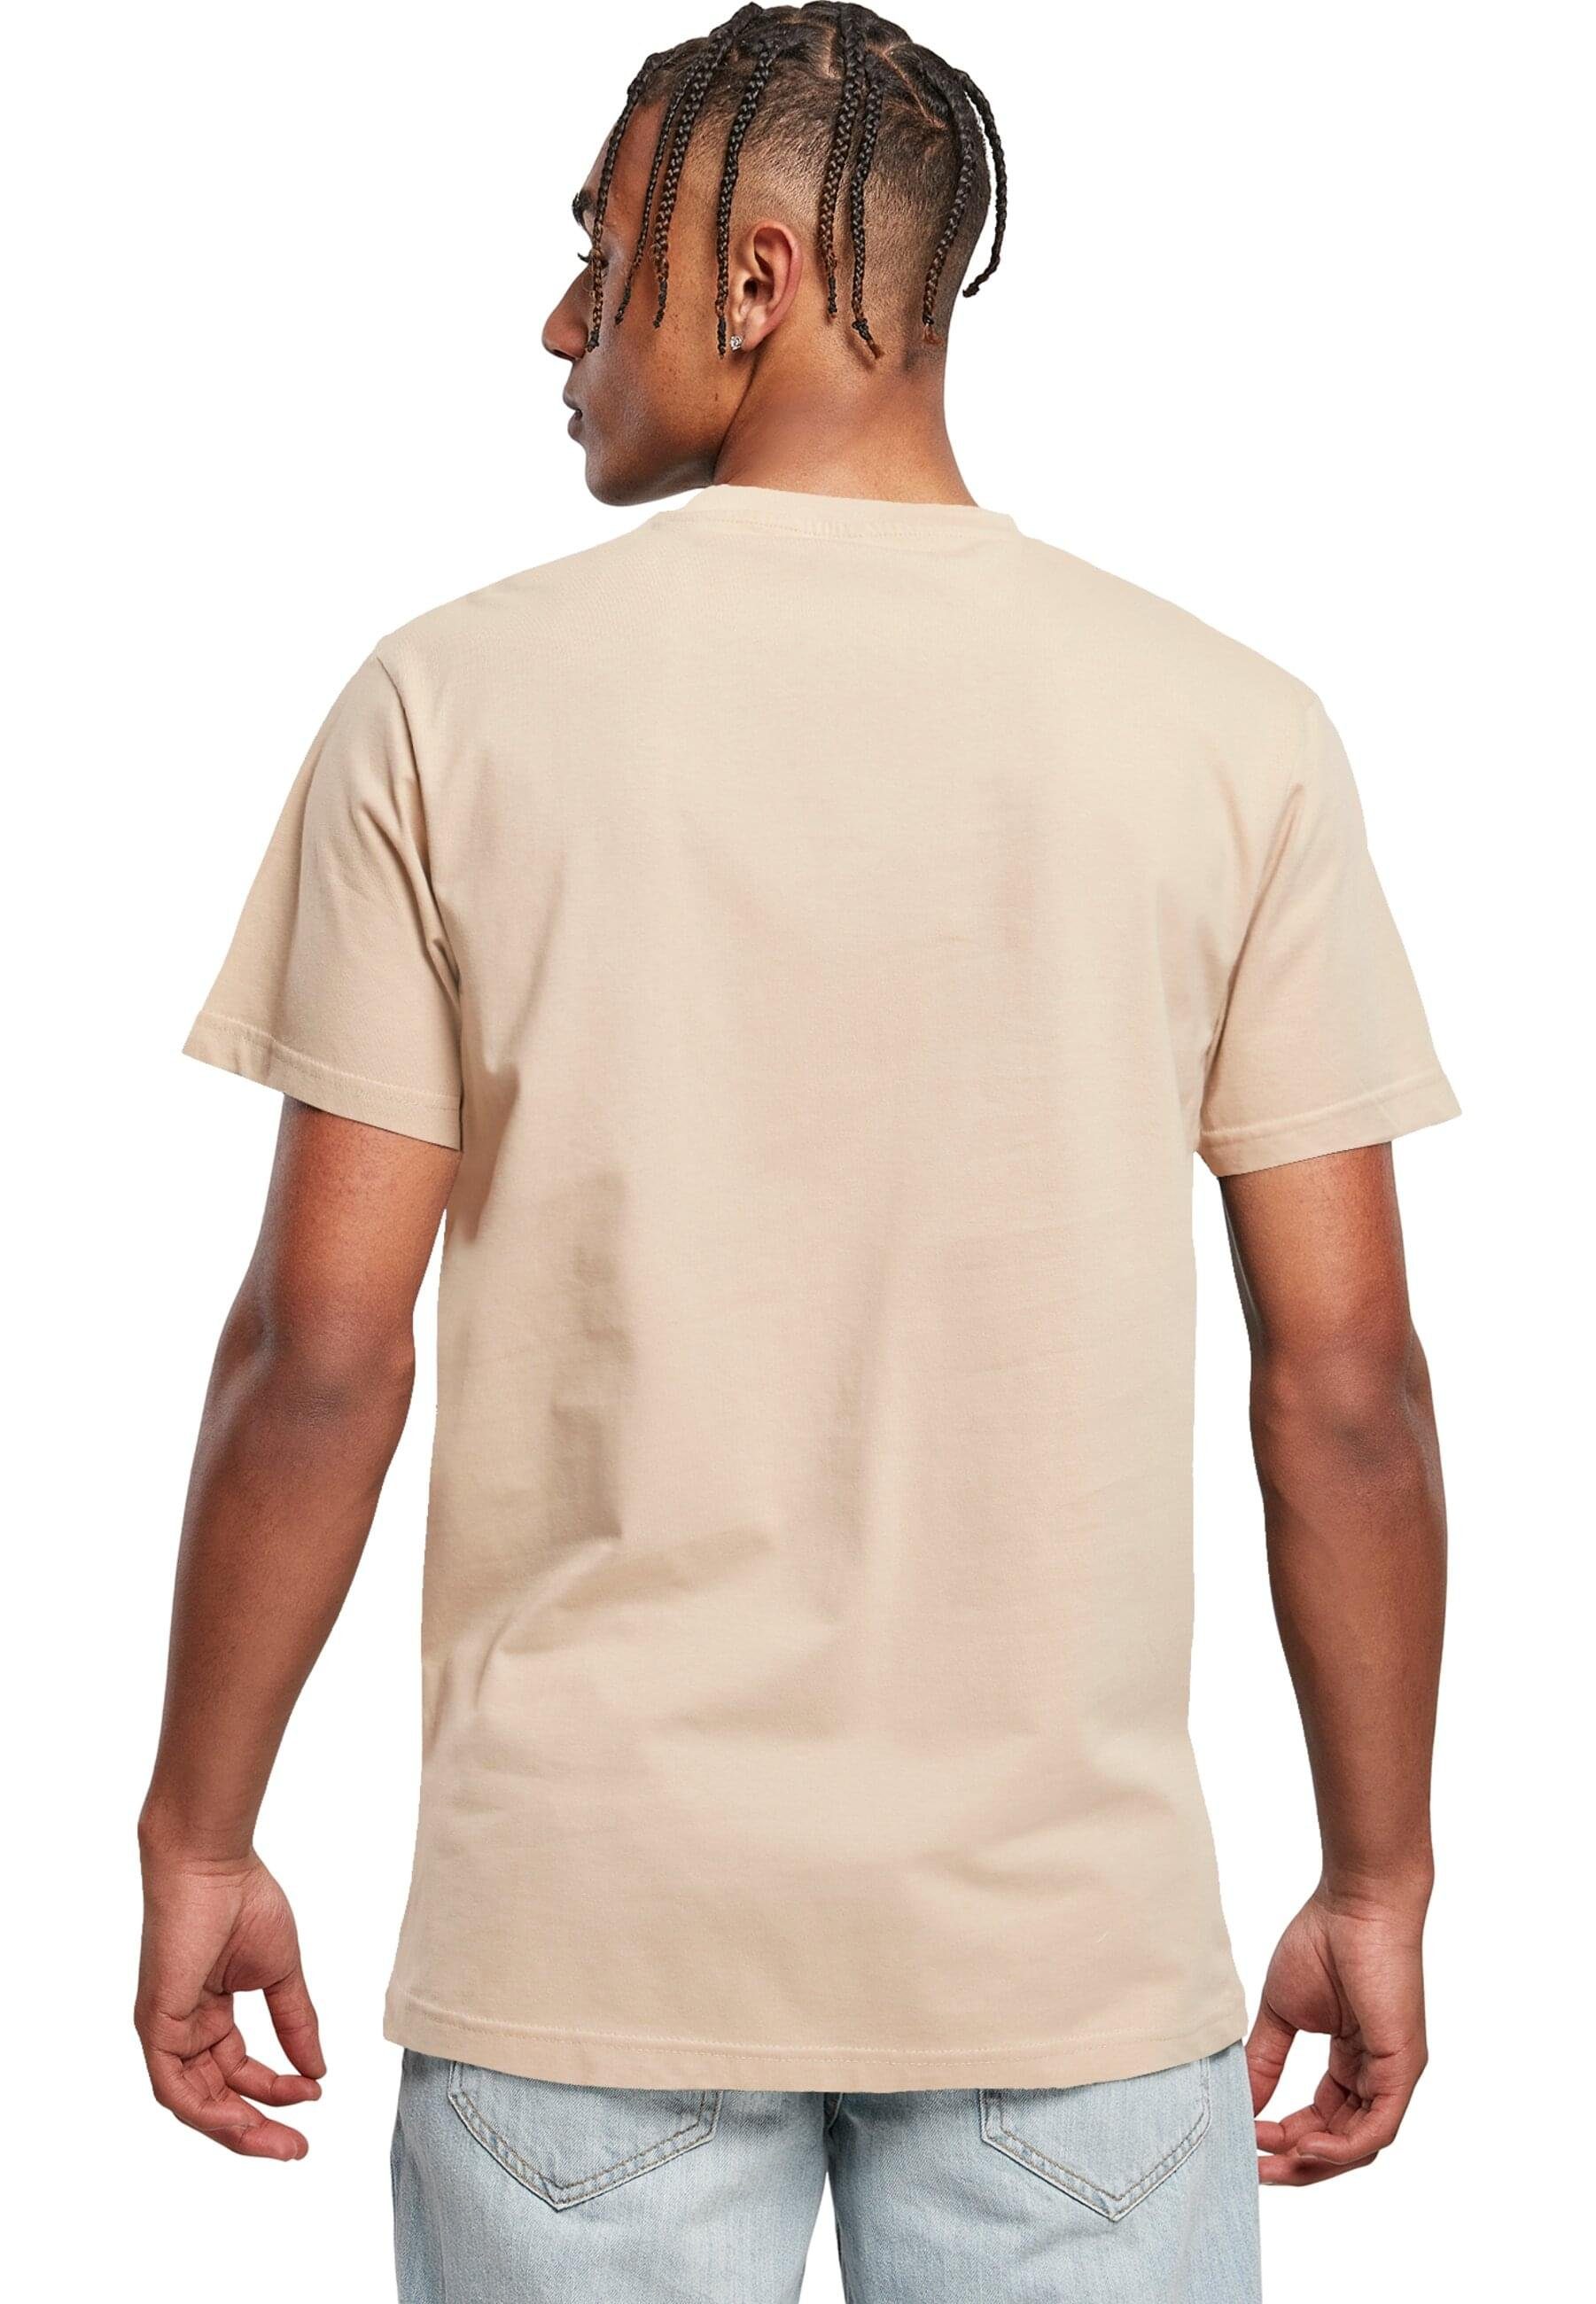 Peanuts (1-tlg) Merchcode sand - Round T-Shirt Neck T-Shirt paws Rebel with Herren